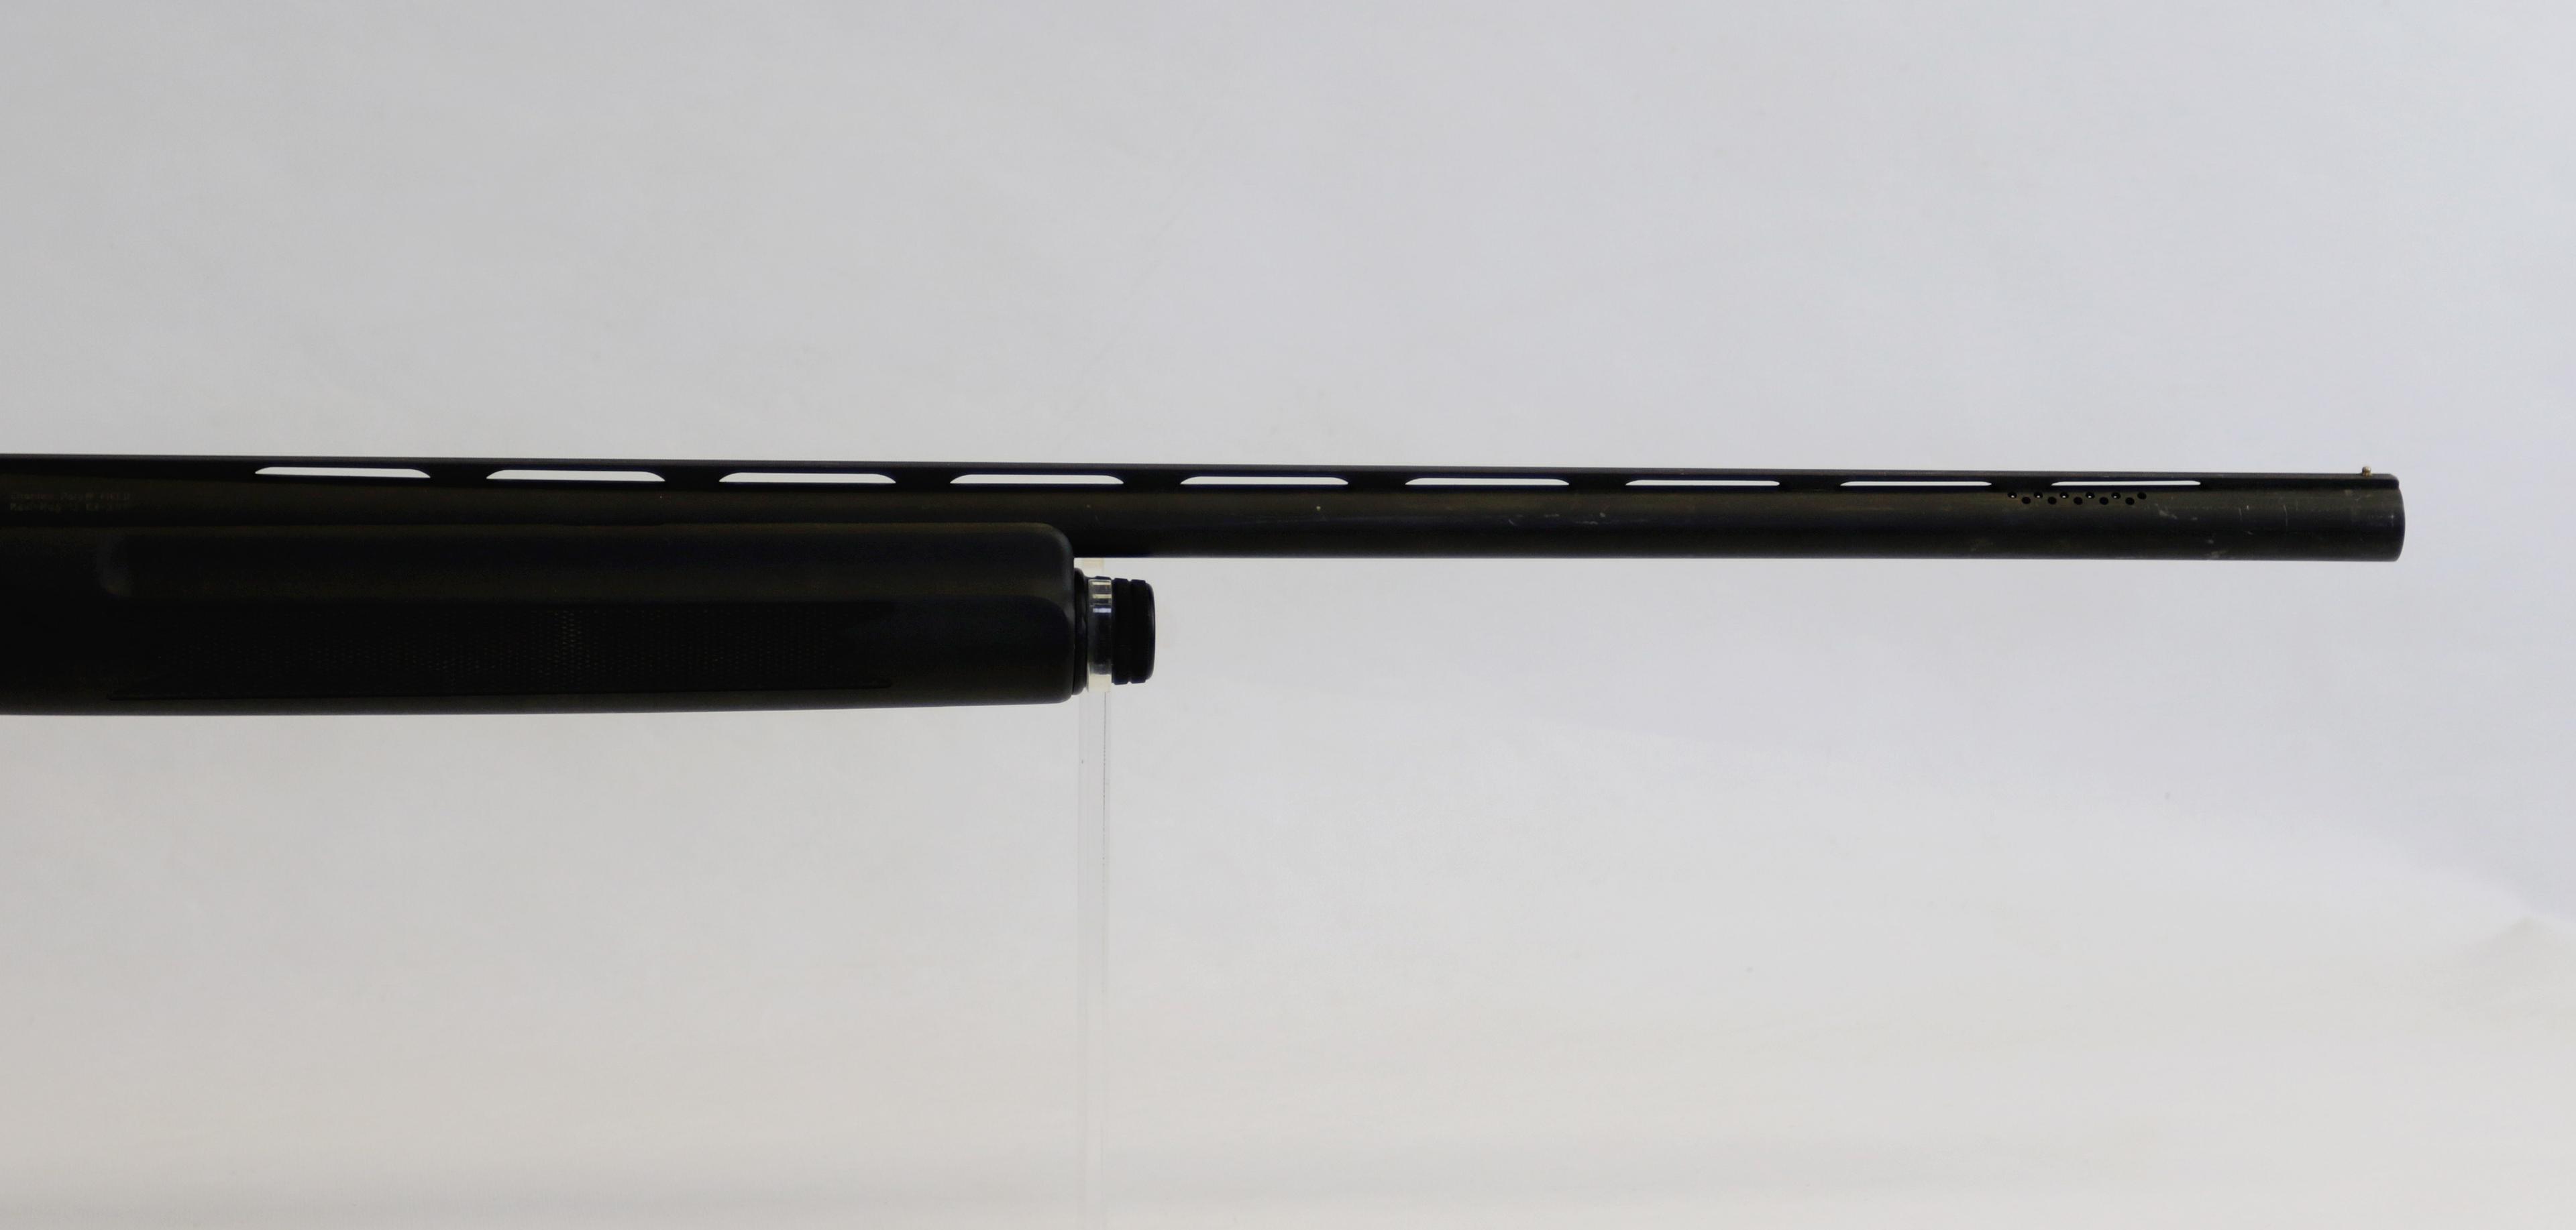 Charles Daly Maxi-mag 12 ga semi-auto shotgun